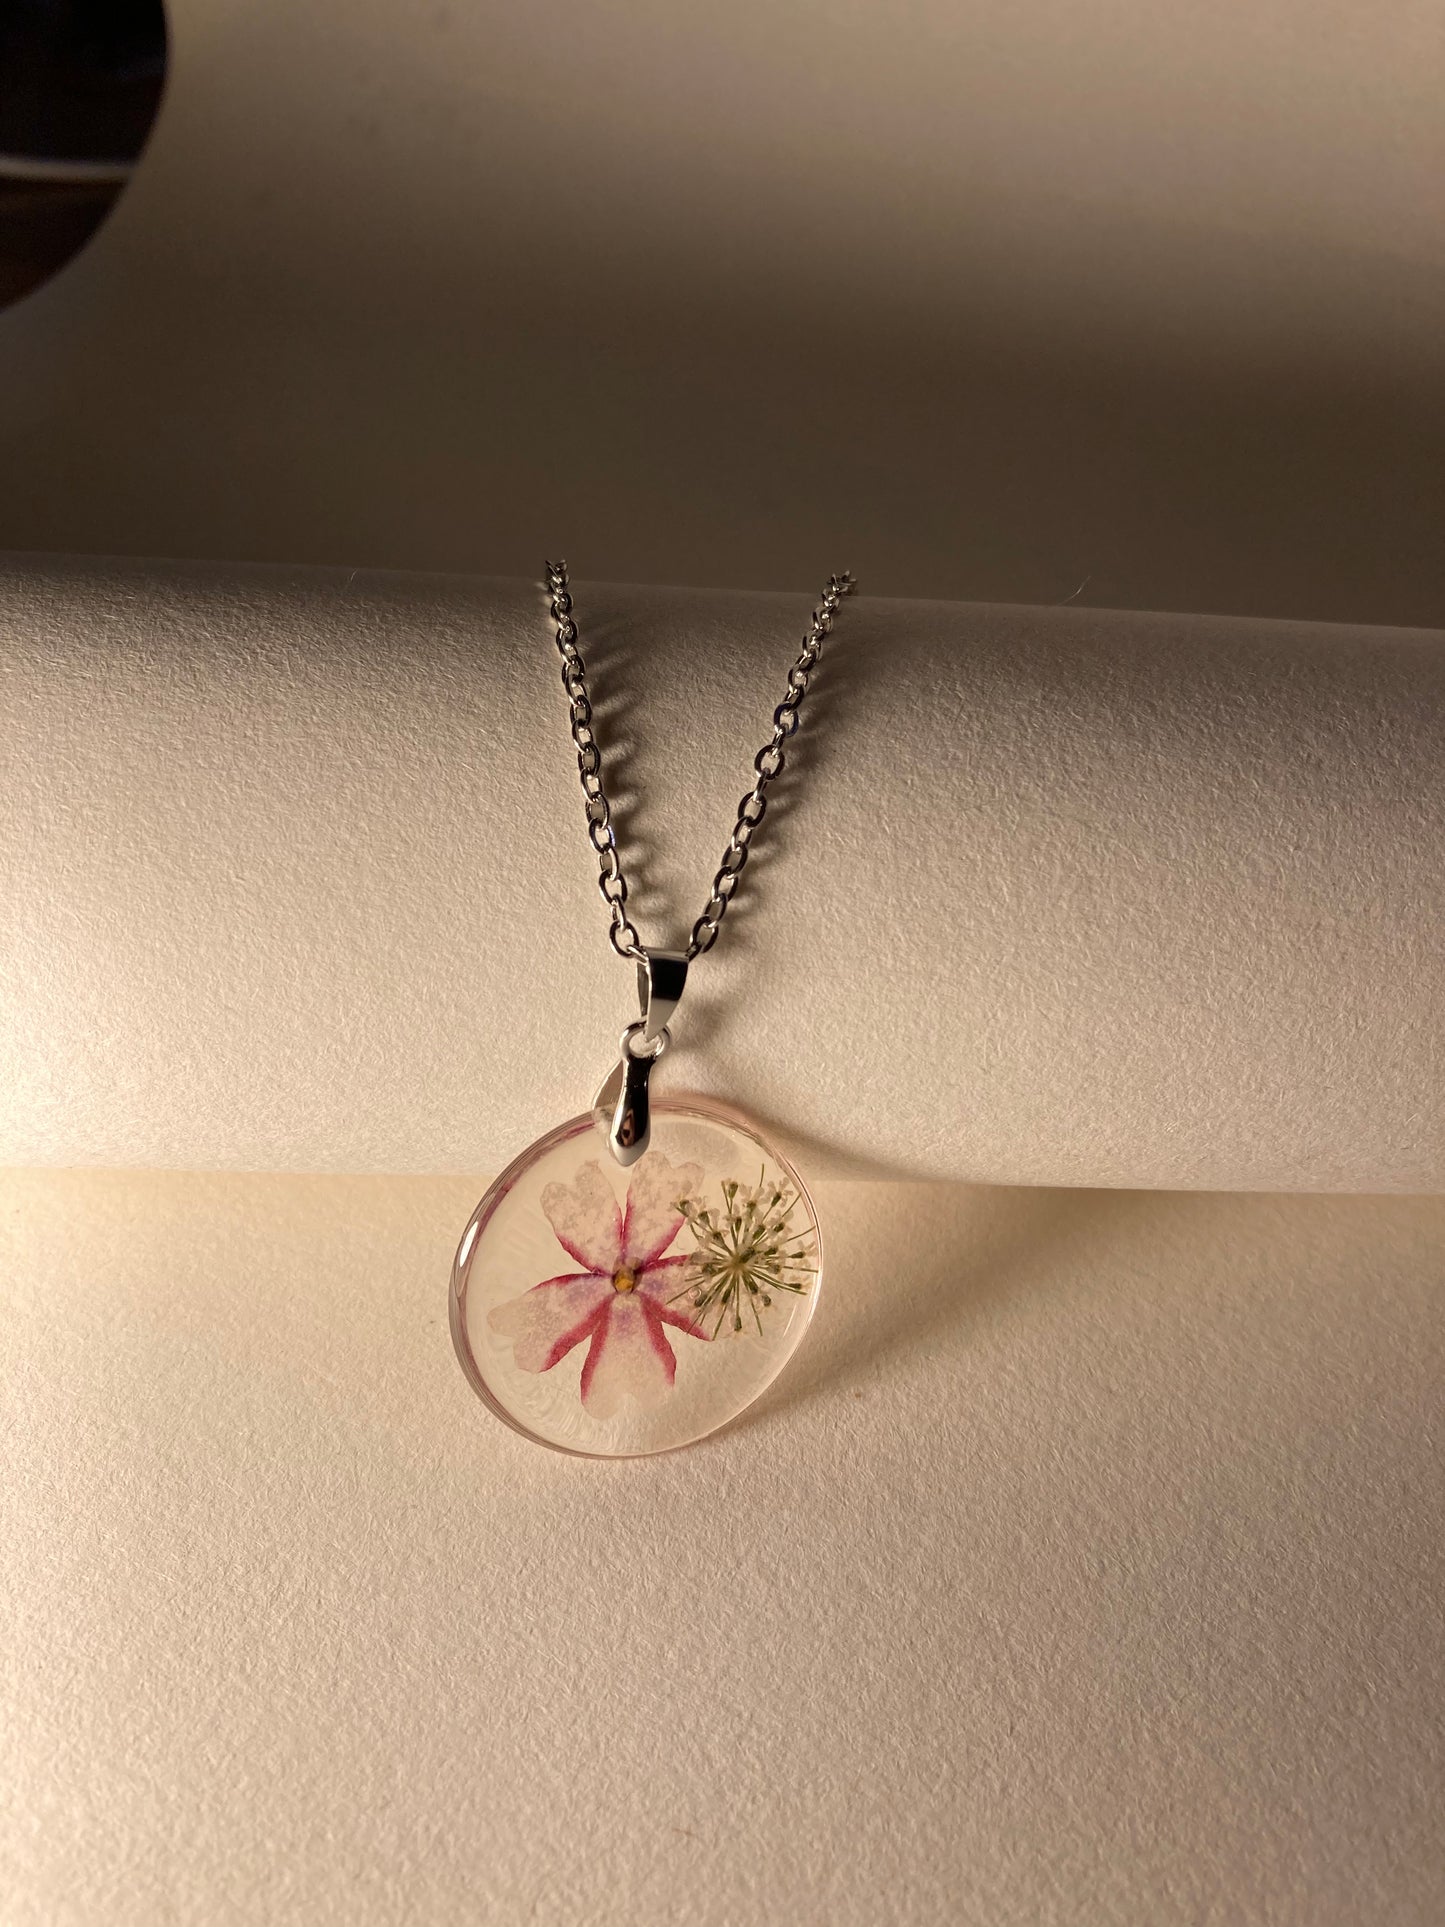 Pressed flower necklace - Pink Flower arrangements